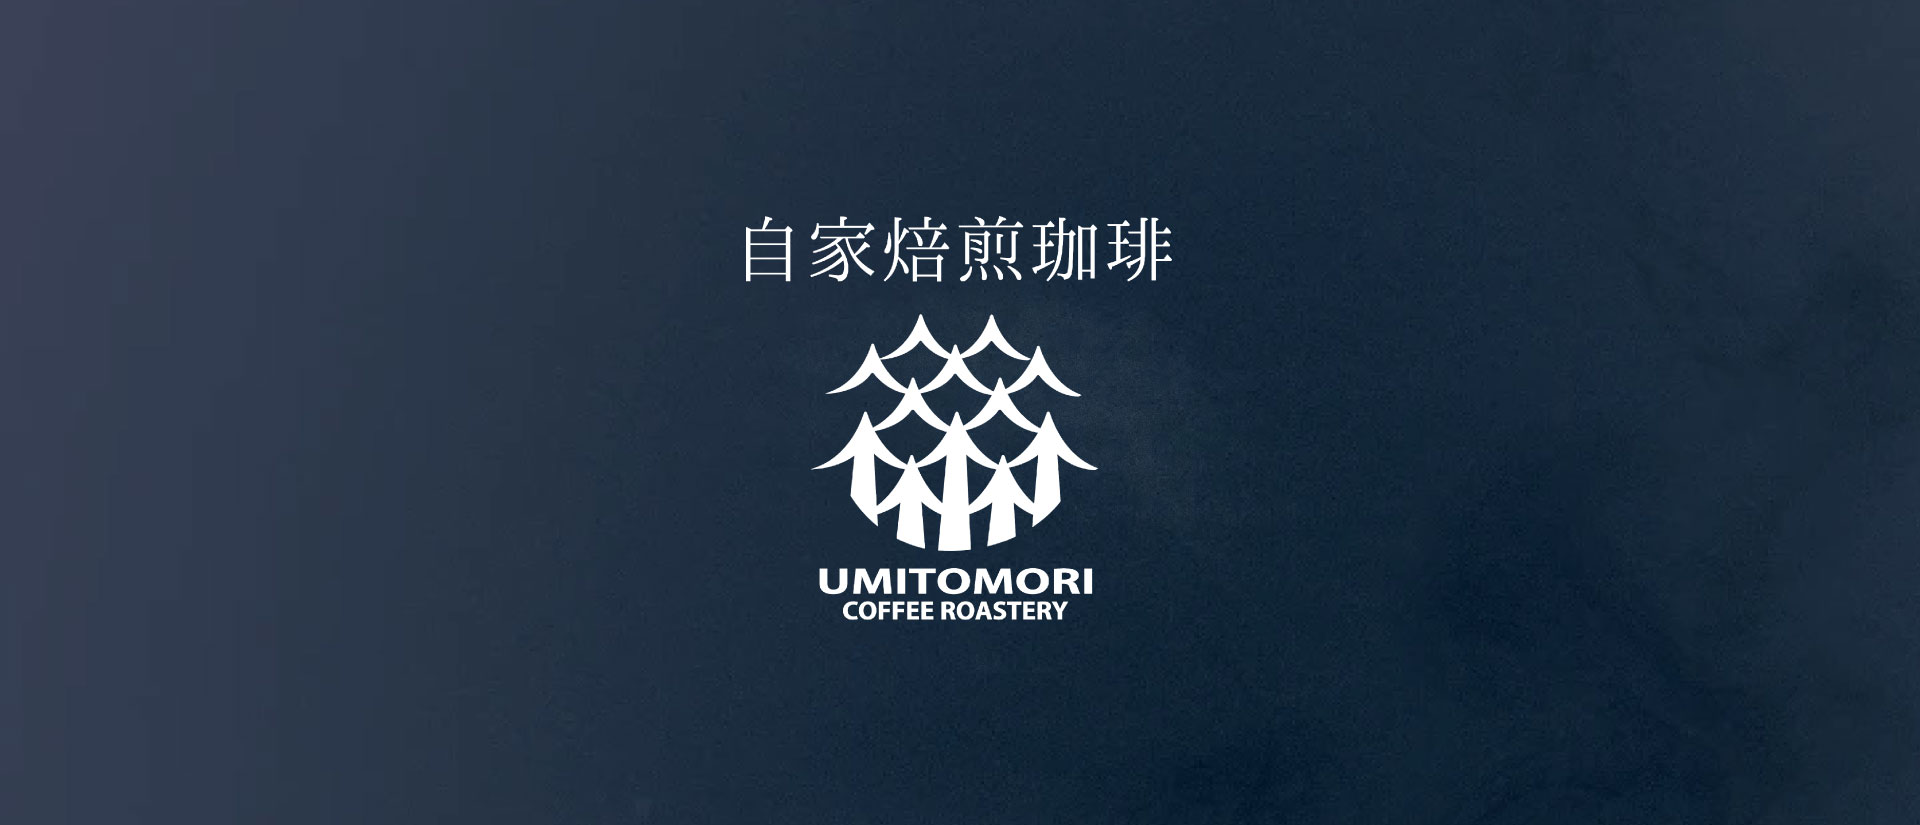 UMITOMORI COFFEE ROASTRAY